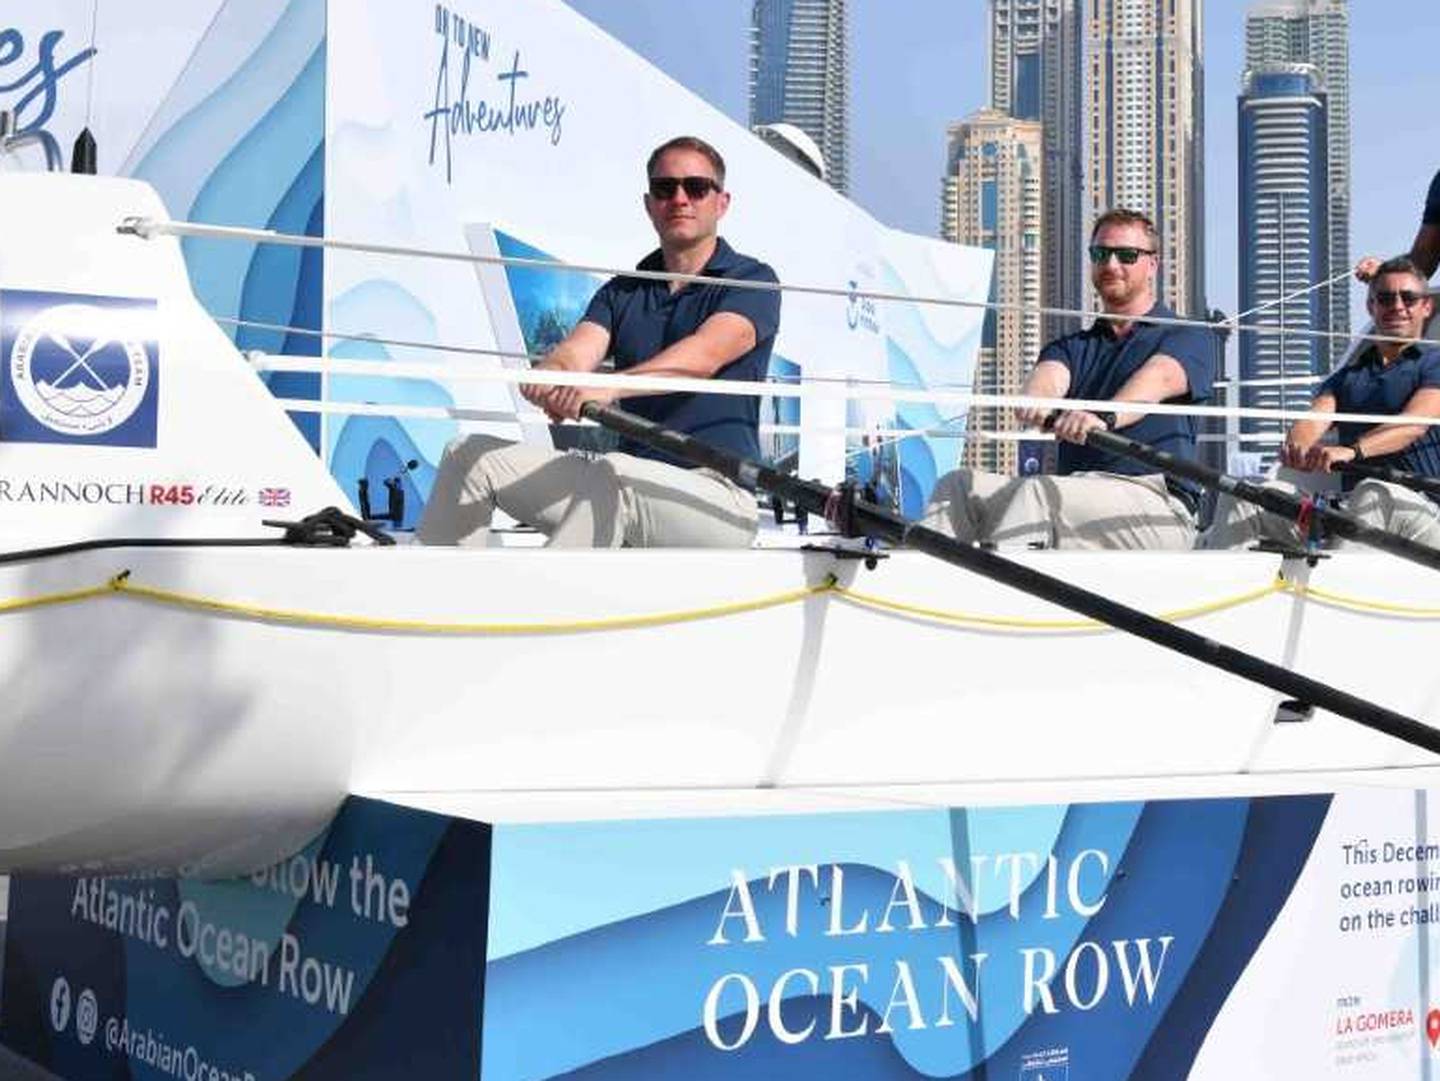 The Arabian Ocean Rowing Team has announced its plan to cross the Atlantic Ocean. Photo: The Arabian Ocean Rowing Team